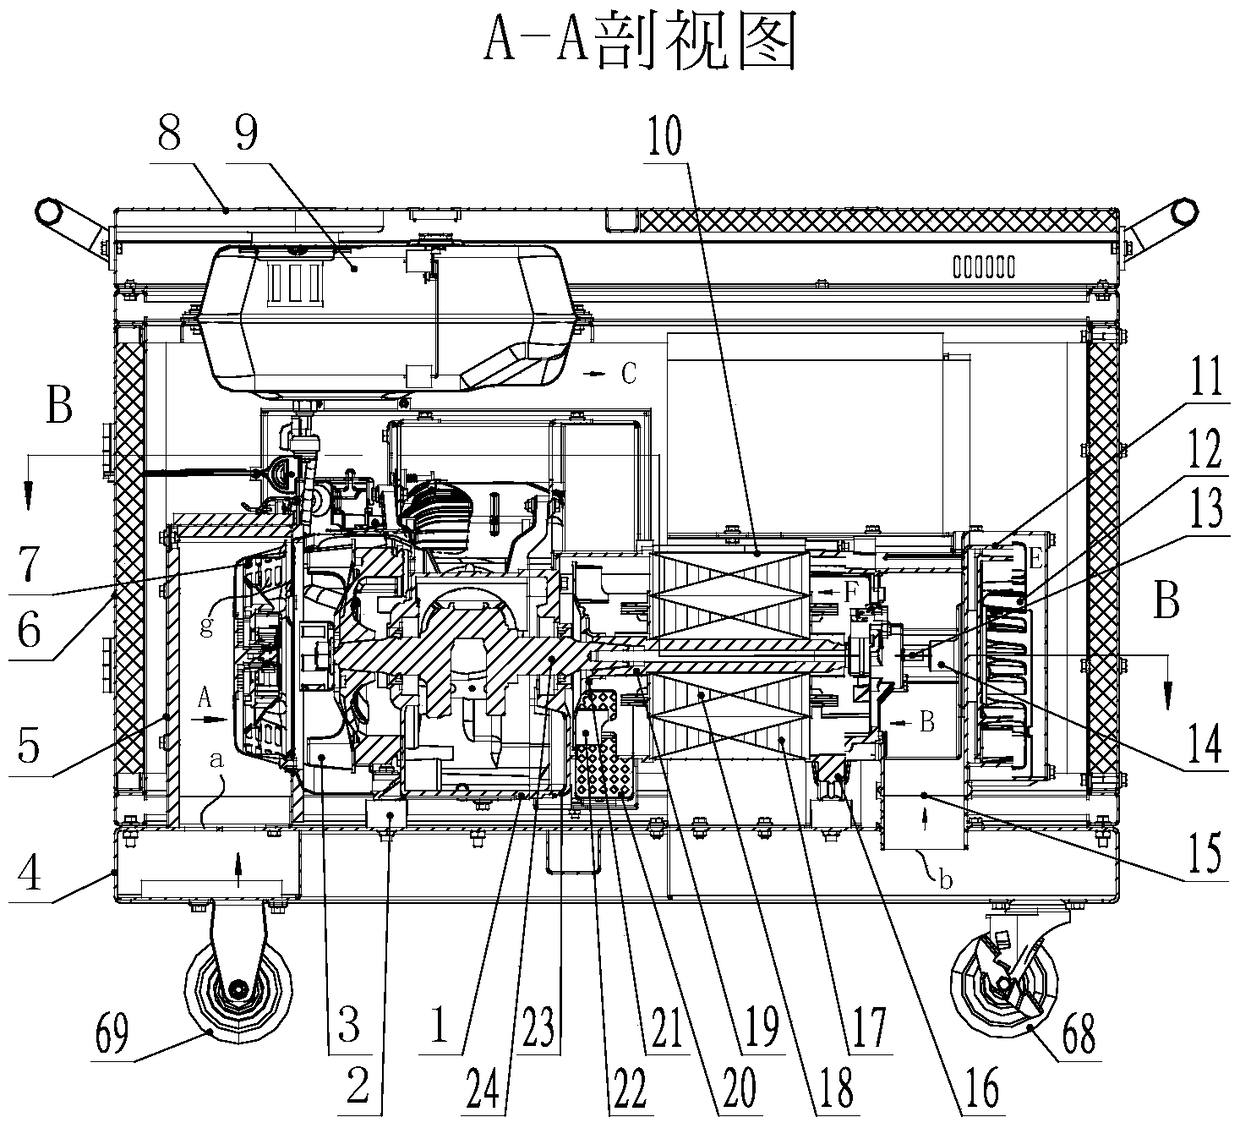 An engine-driven generator set